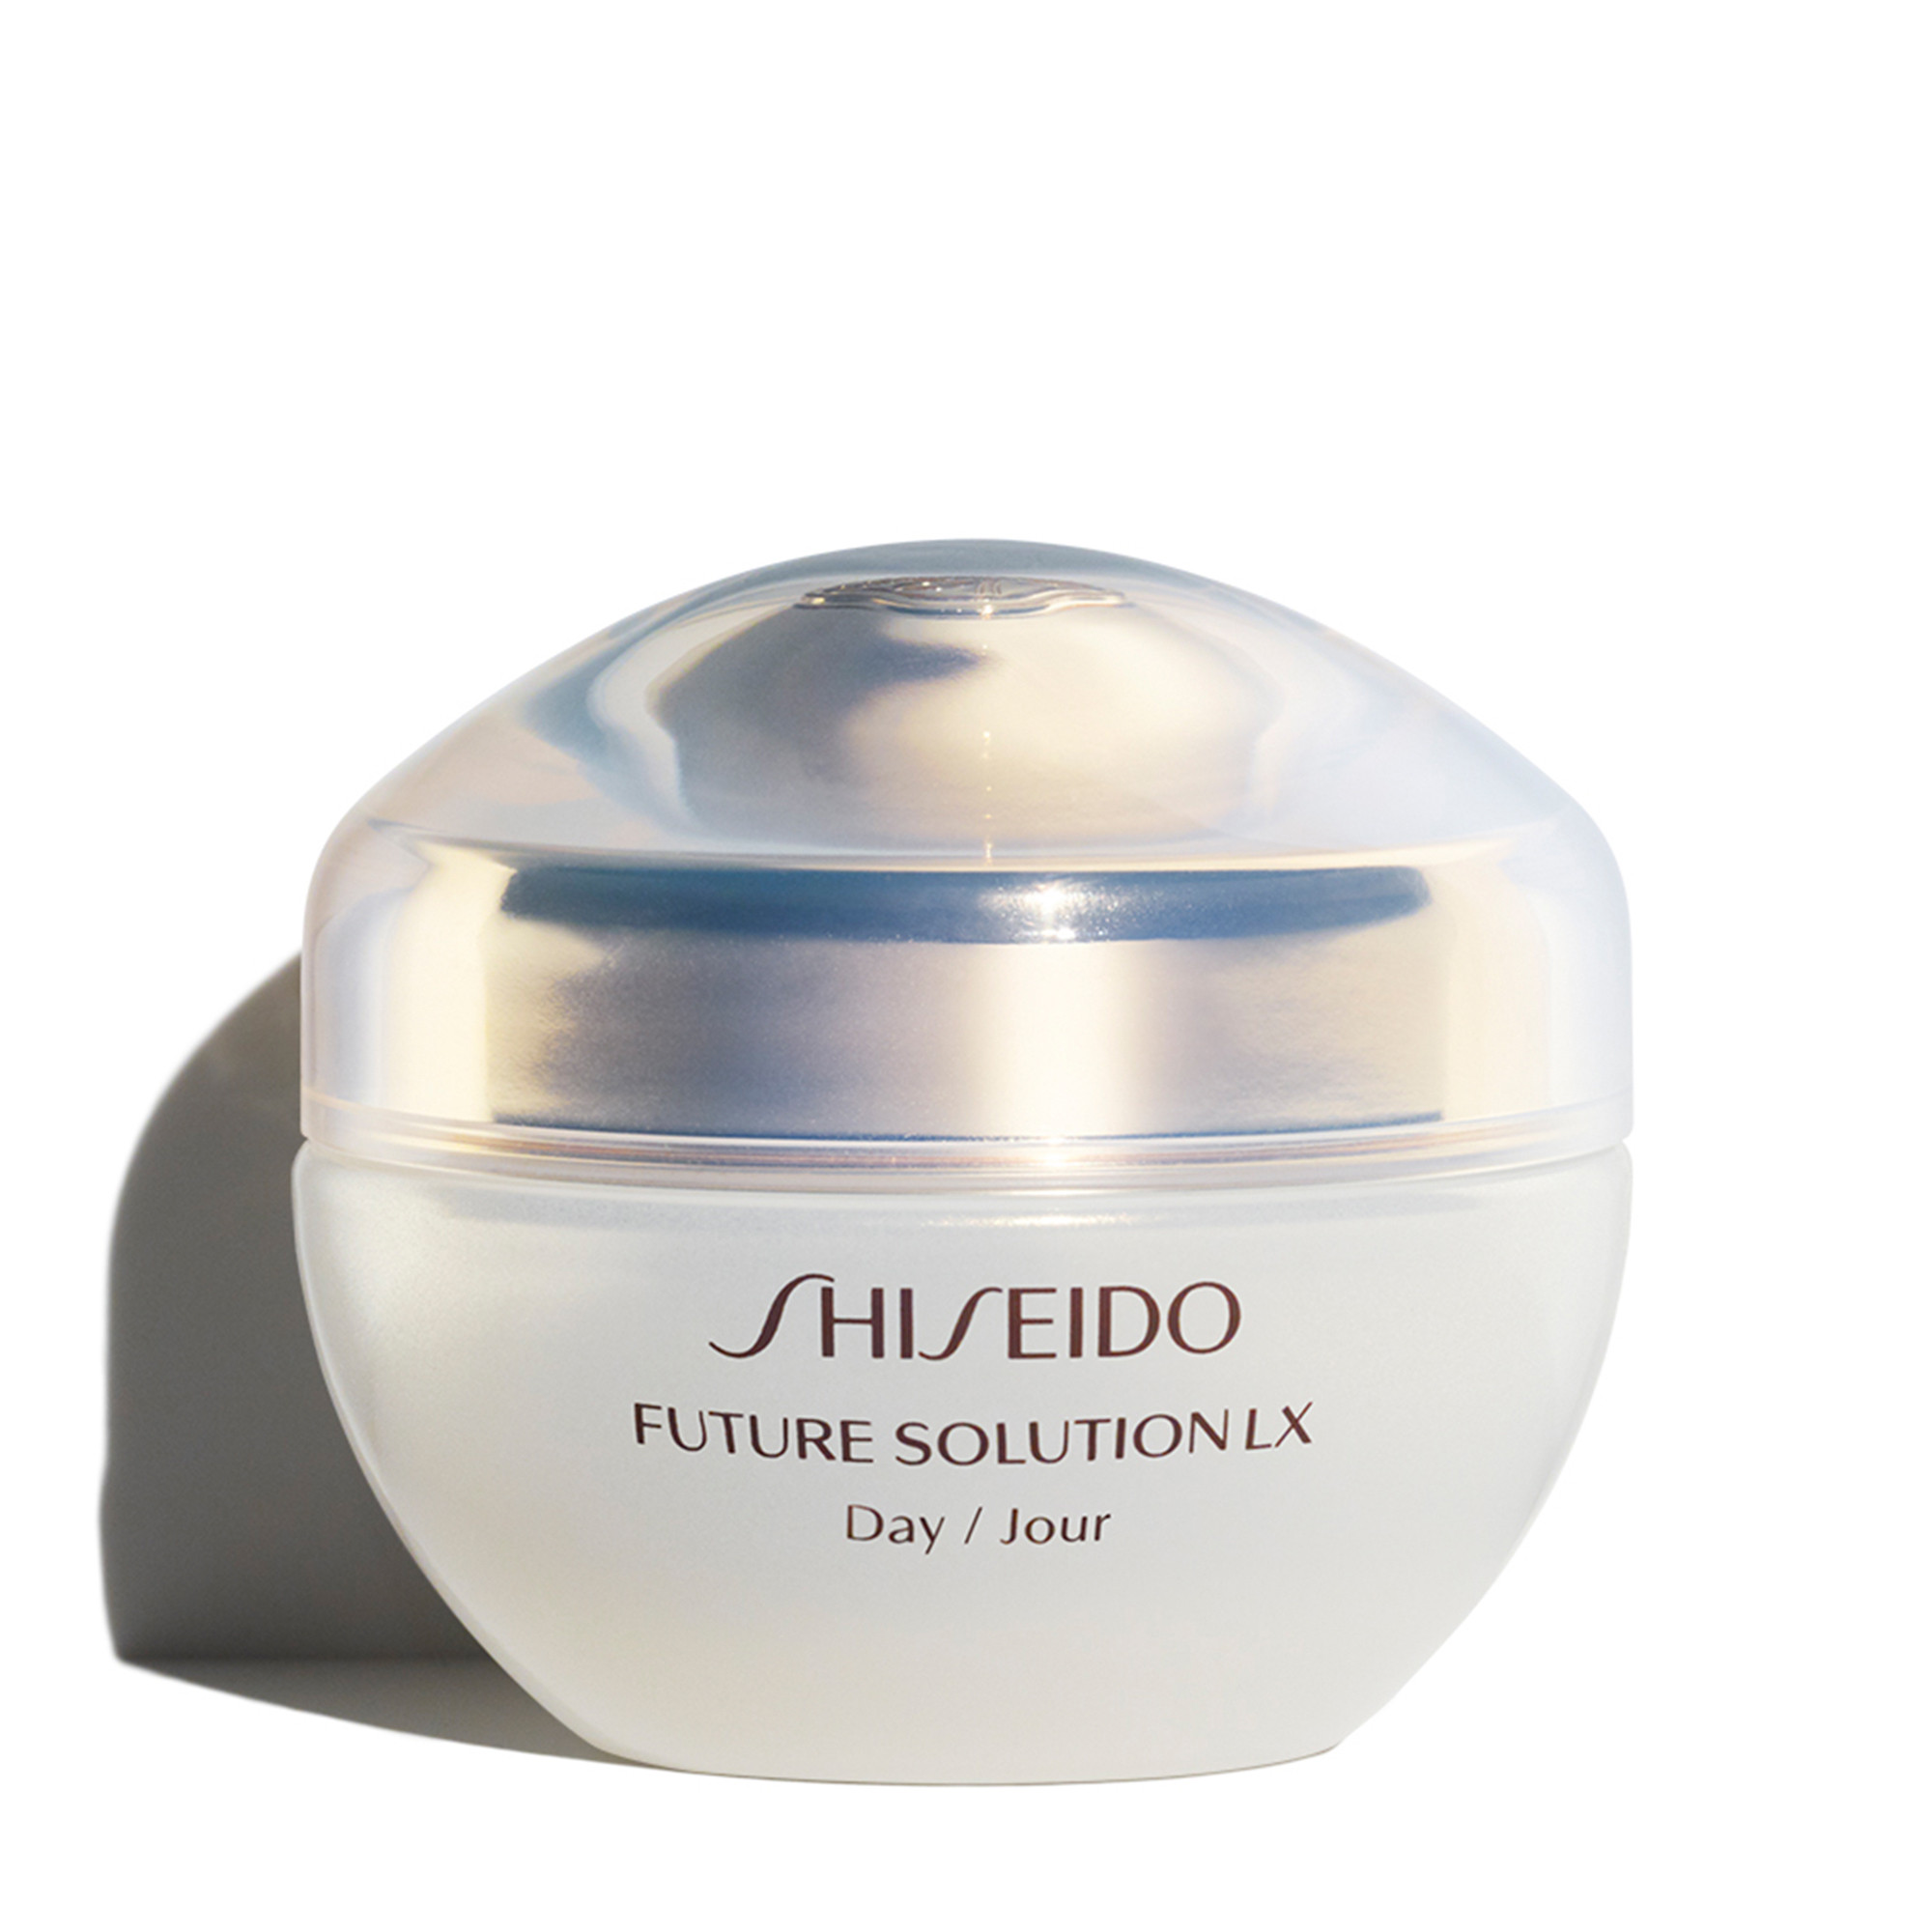 Shiseido solution. Shiseido Future solution LX. Shiseido антивозрастной крем. Крем для лица шисейдо антивозрастной. Shiseido крем для лица SPF 20 дневной.